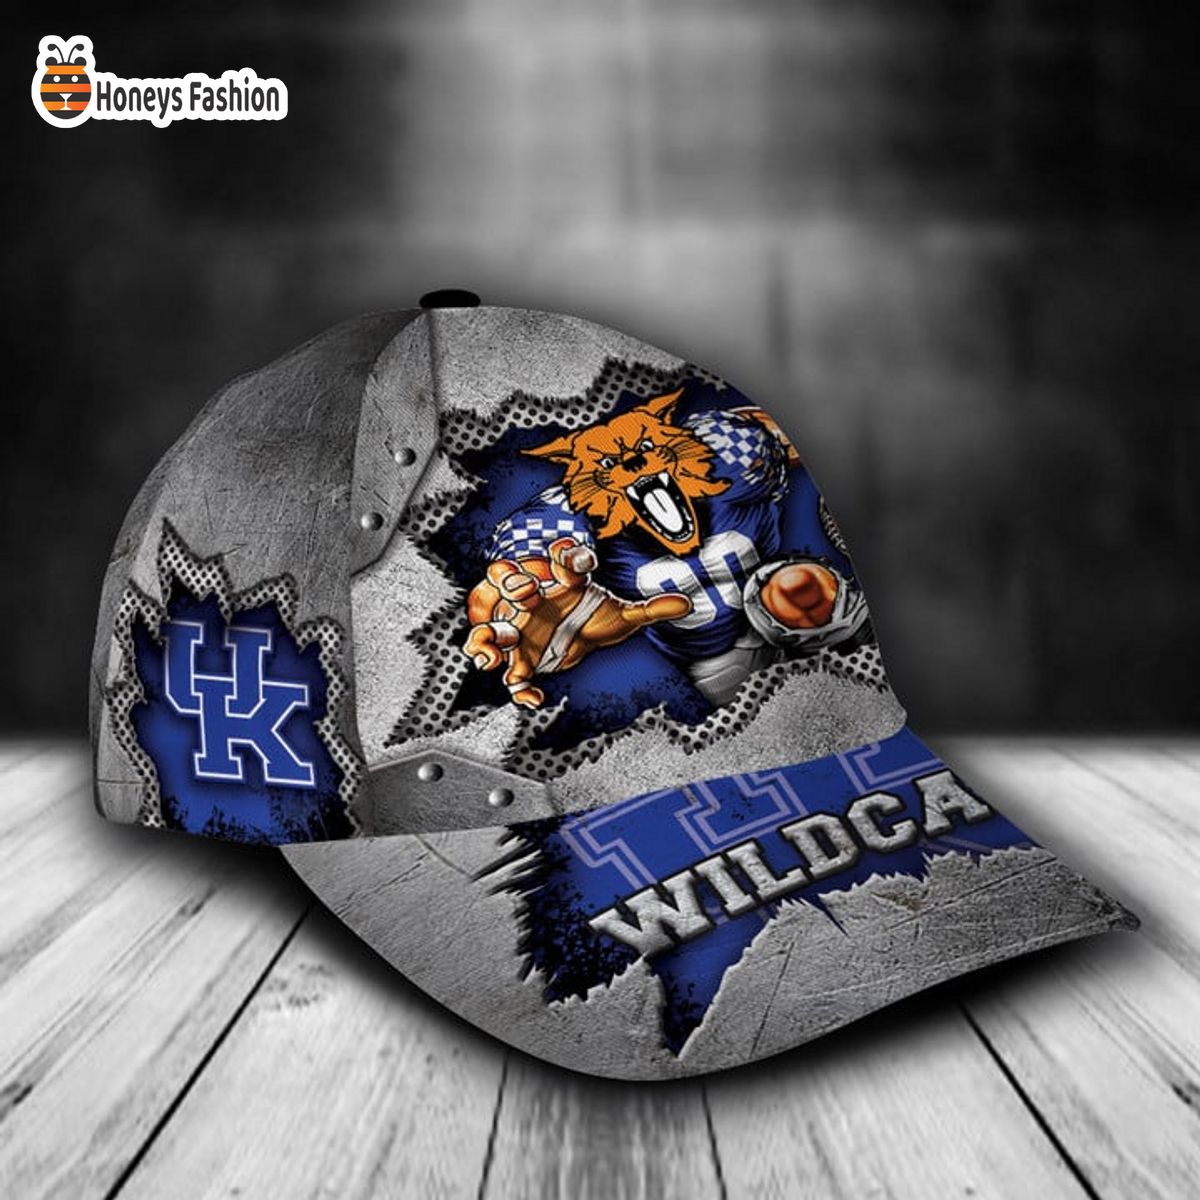 Kentucky Wildcats mascot custom name classic cap